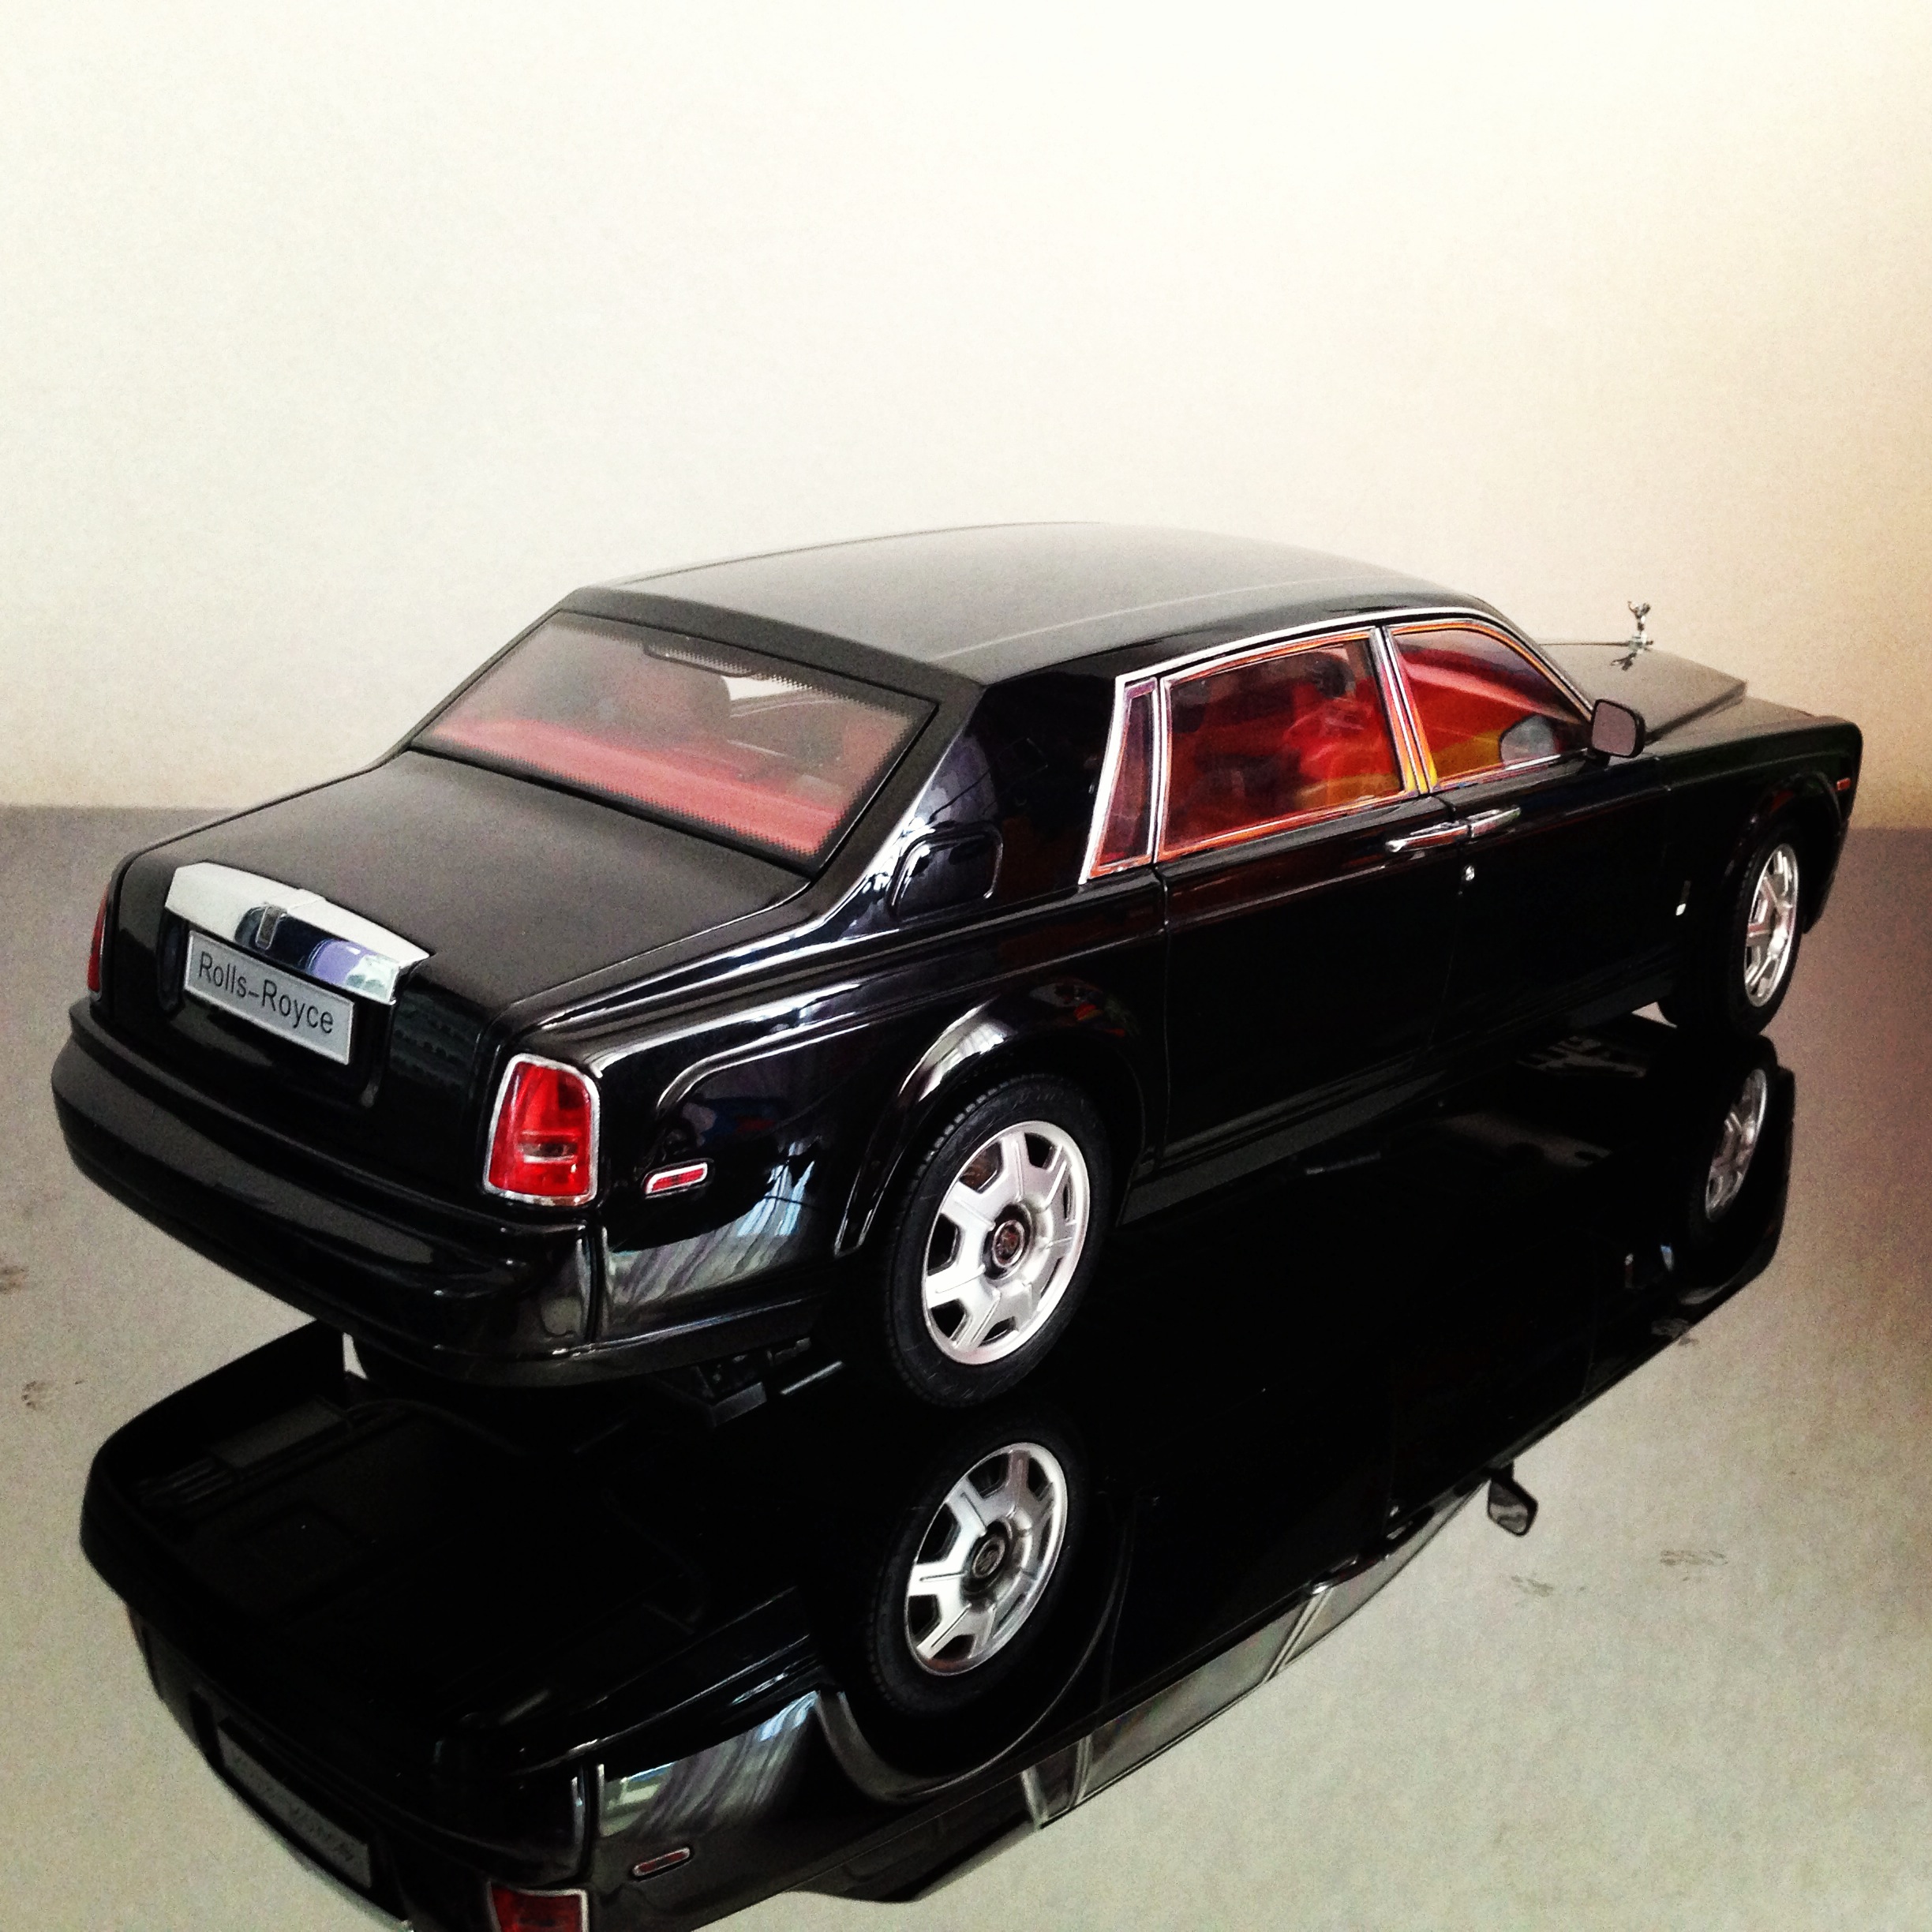 Rolls-Royce Phantom, black (china)